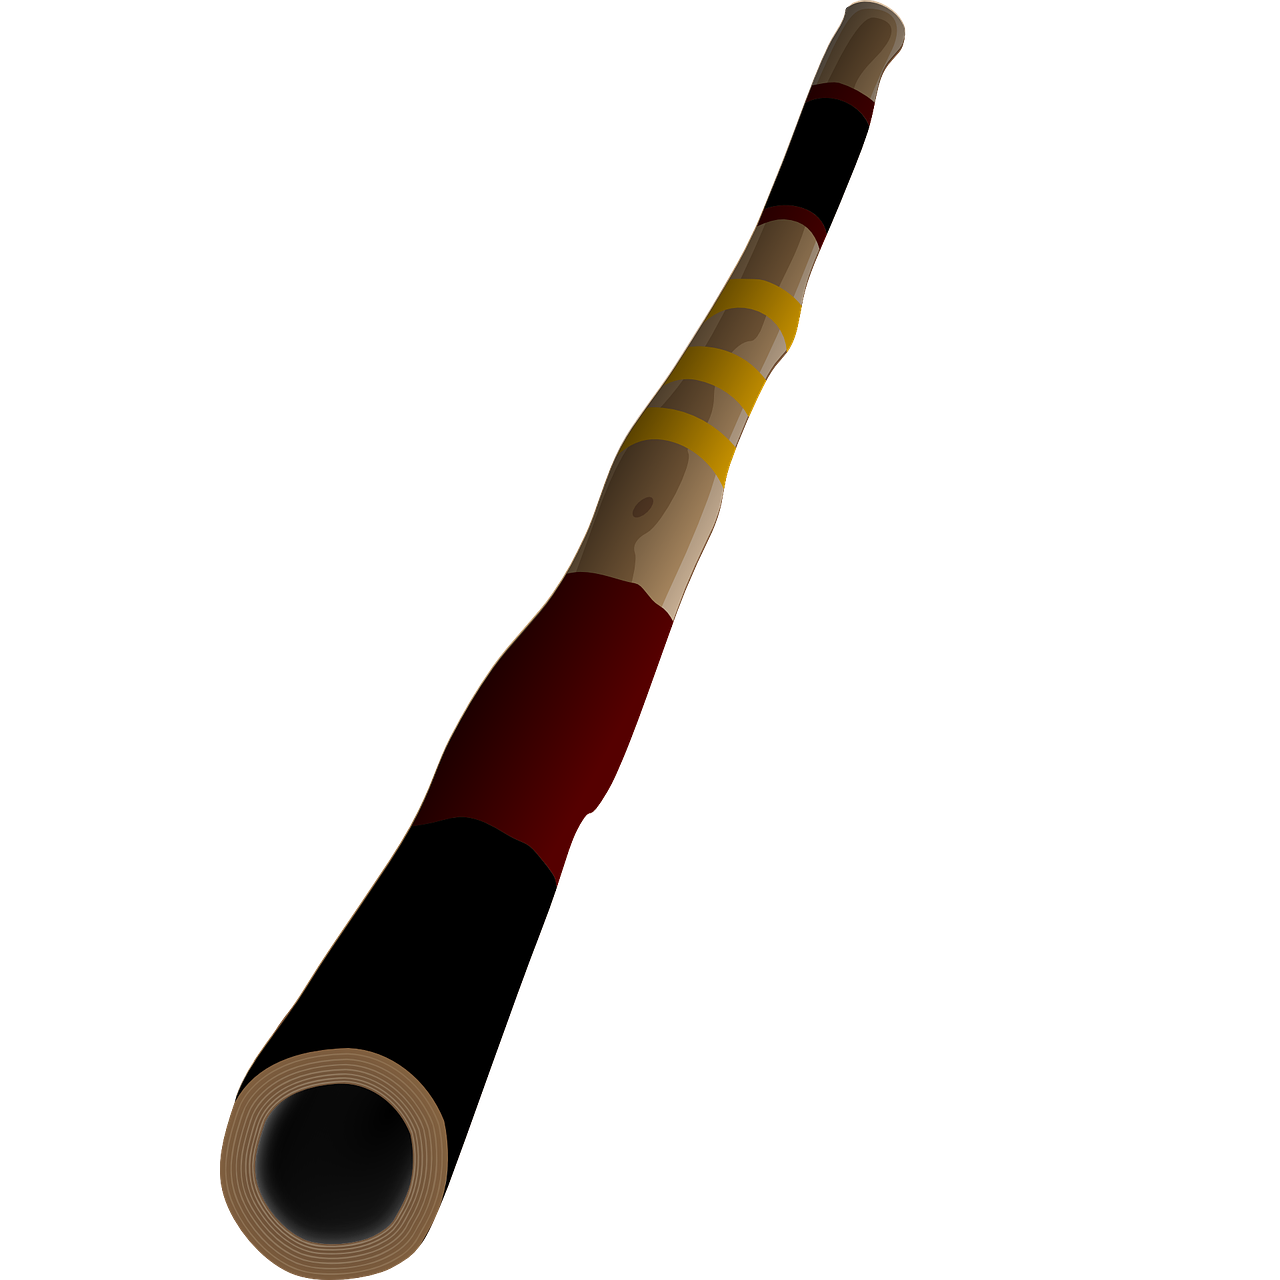 To do Didgeridoo!